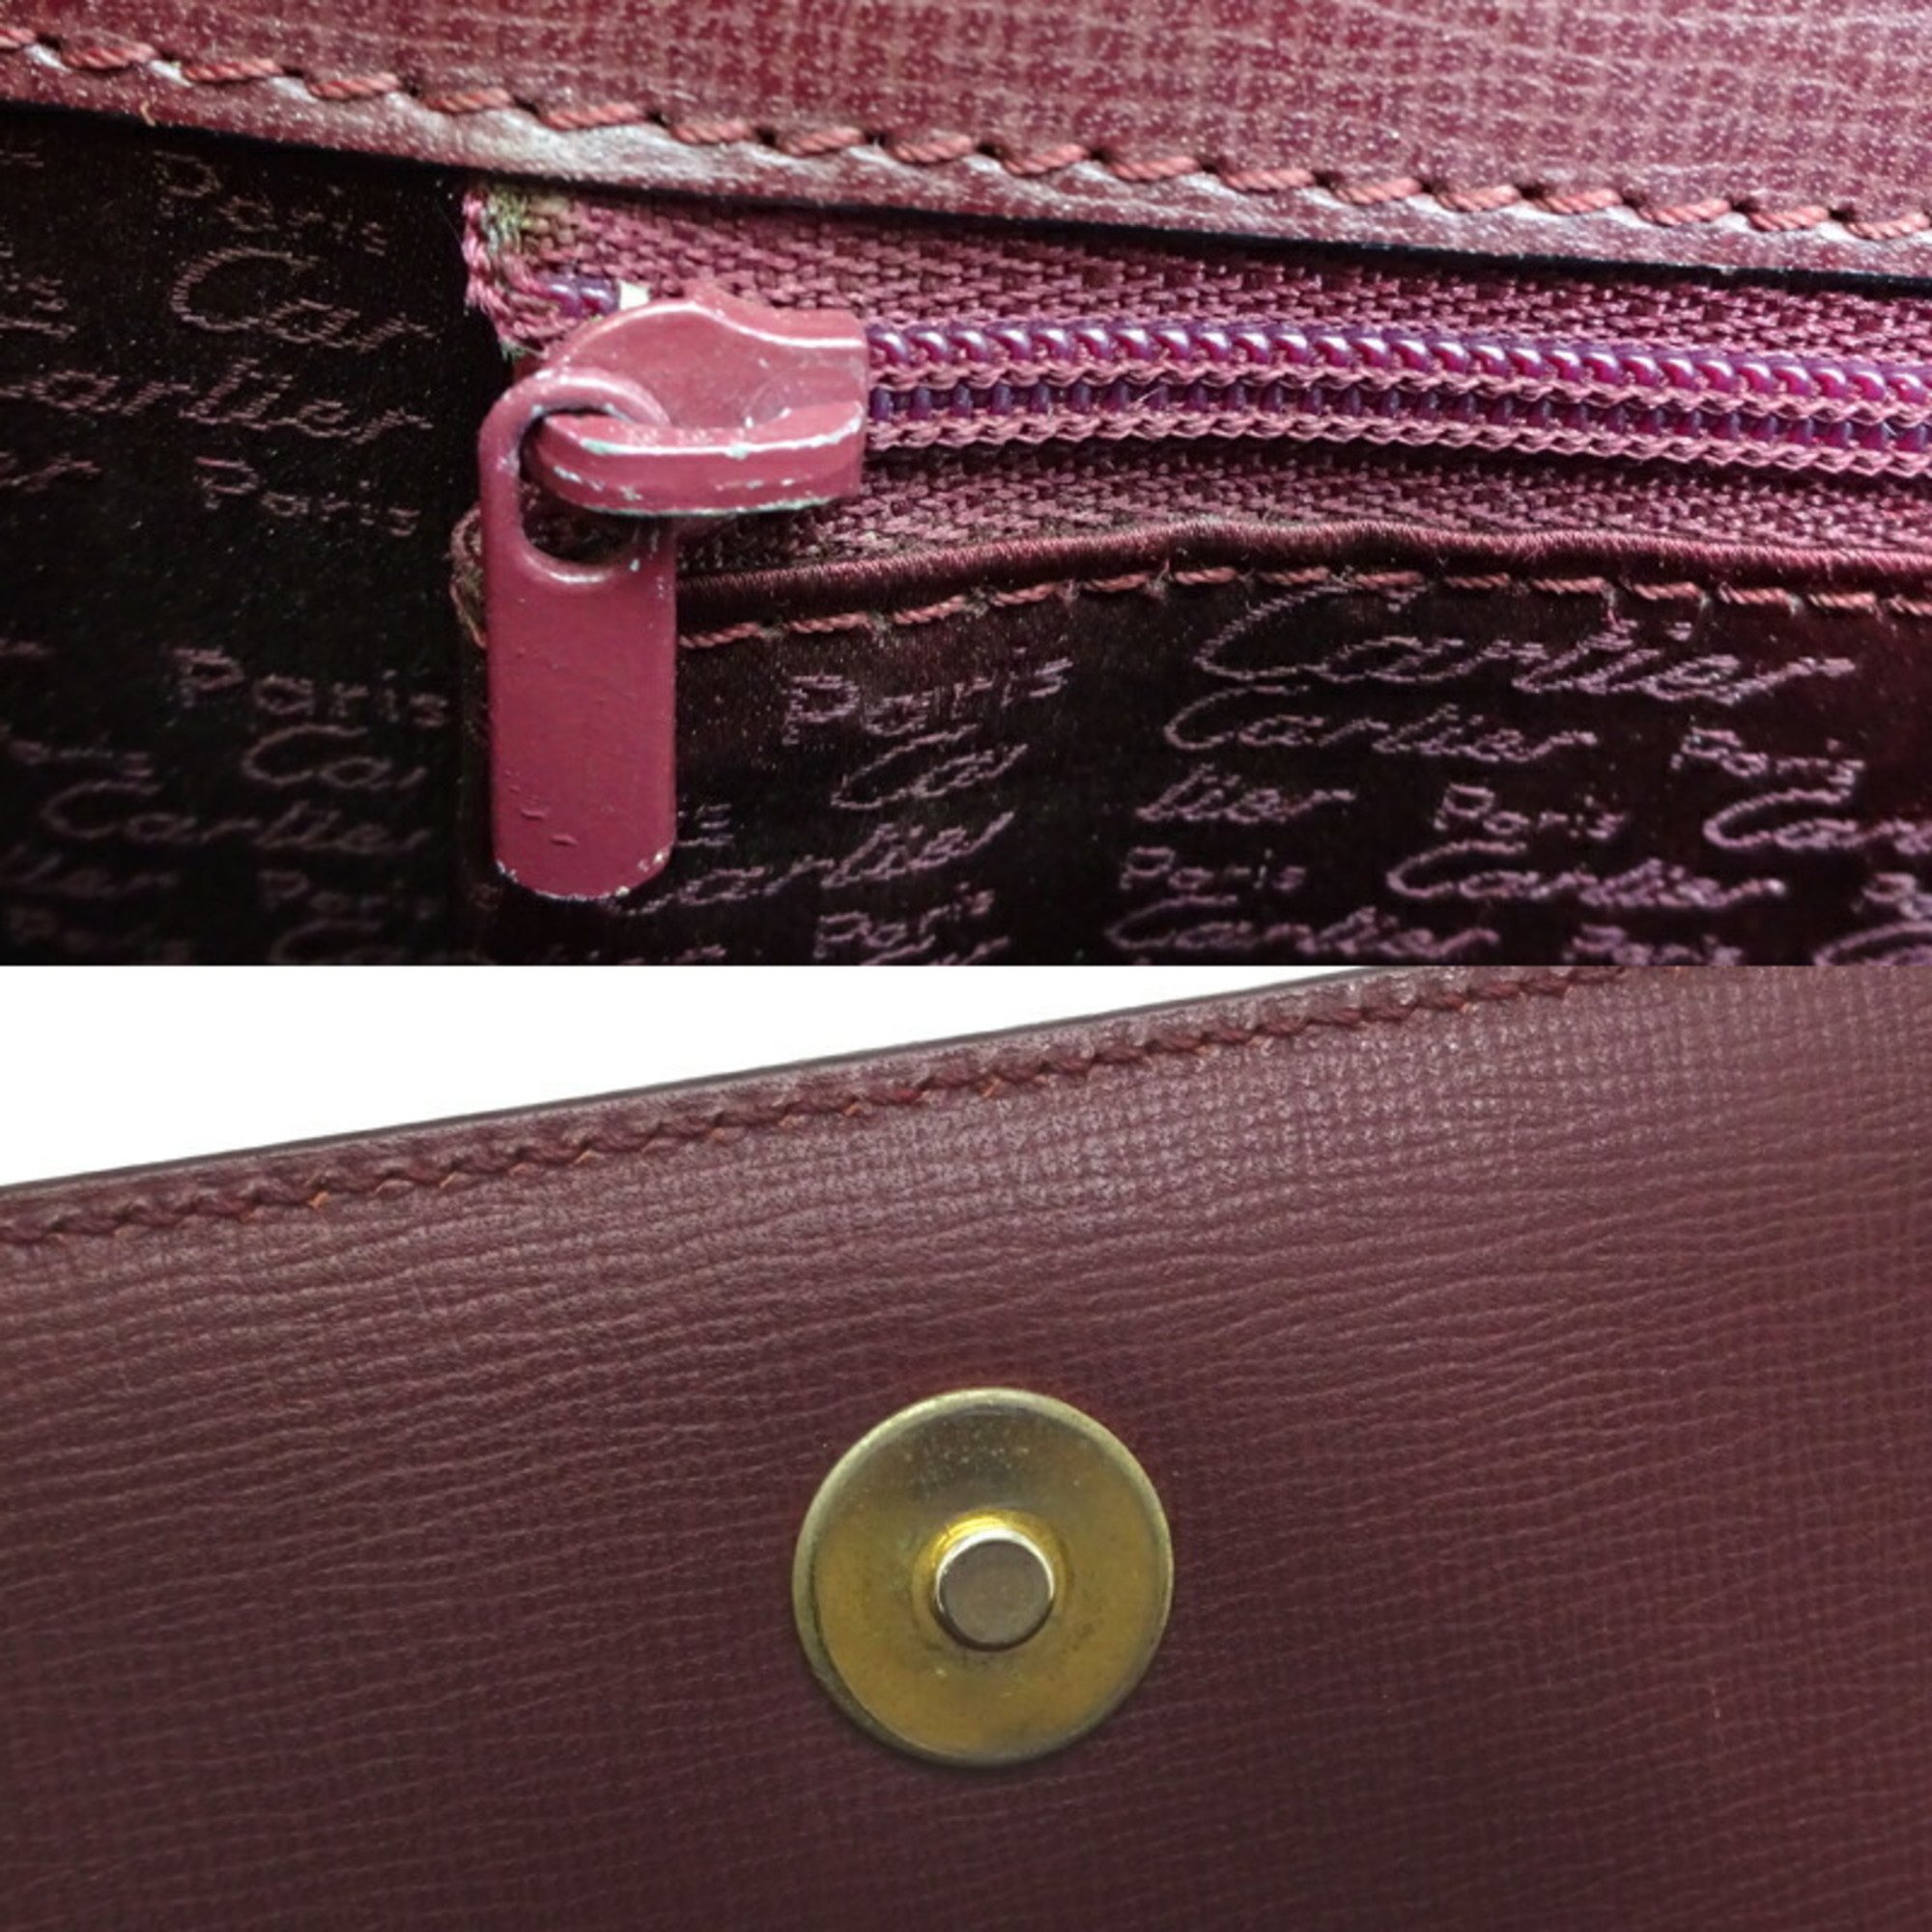 Cartier Must Line Clutch Bag for Women and Men, Second Bag, Leather, Bordeaux